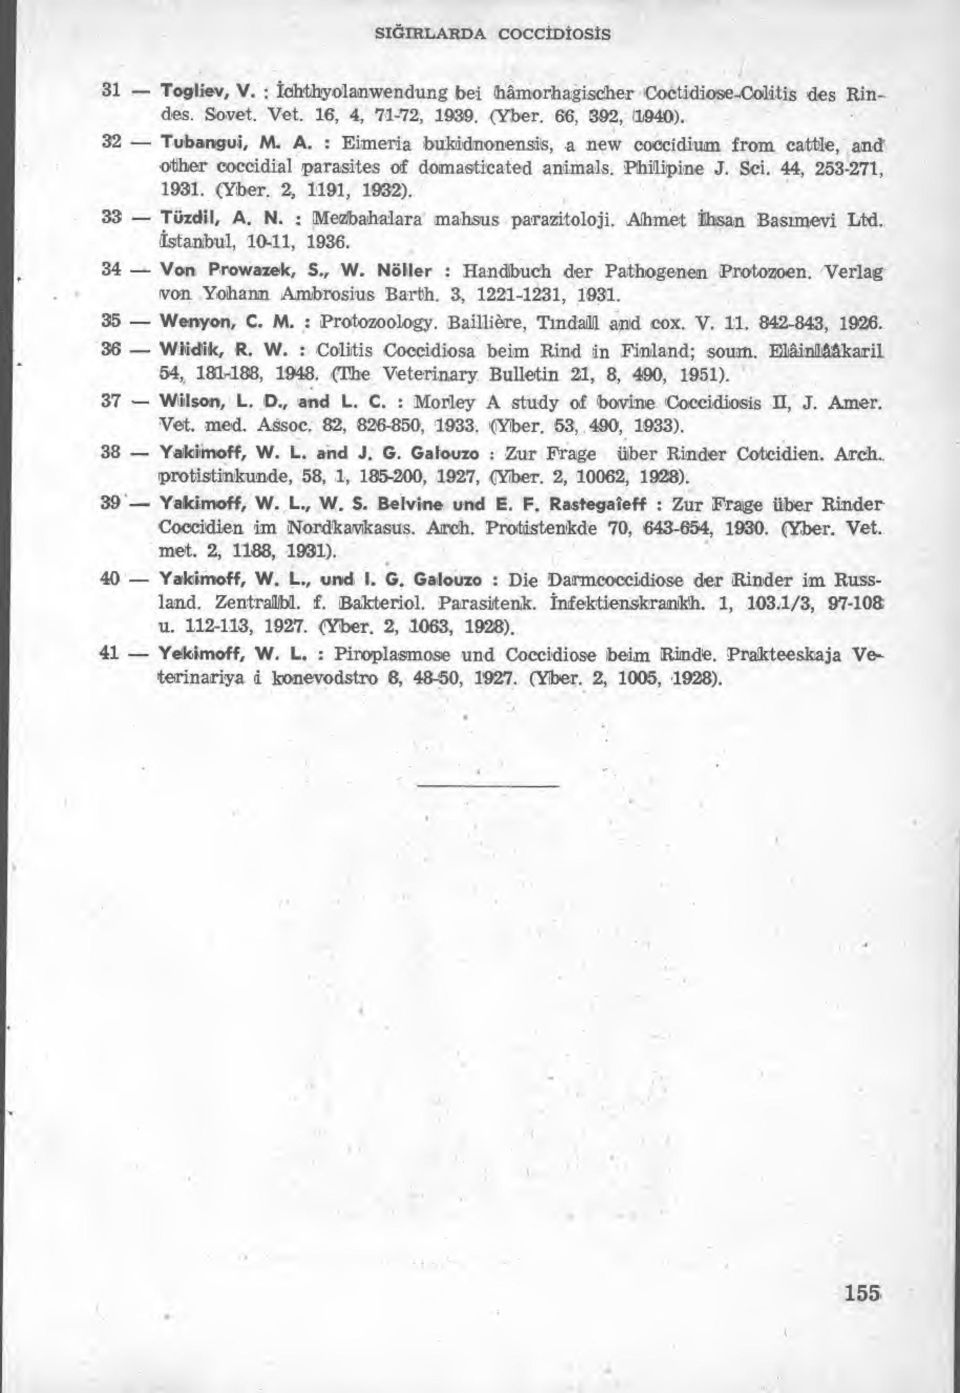 : Mezbahalara mahsus parazitoloji. Ahmet ihsan Bas ımevi Ltd. Istanbul, 10-11, 1936. 34 - Van Prowazek, S., W. Nöller : Handbuch der Pathogenen Protozoen. Verlag von Yobann Ambrosius Barth.